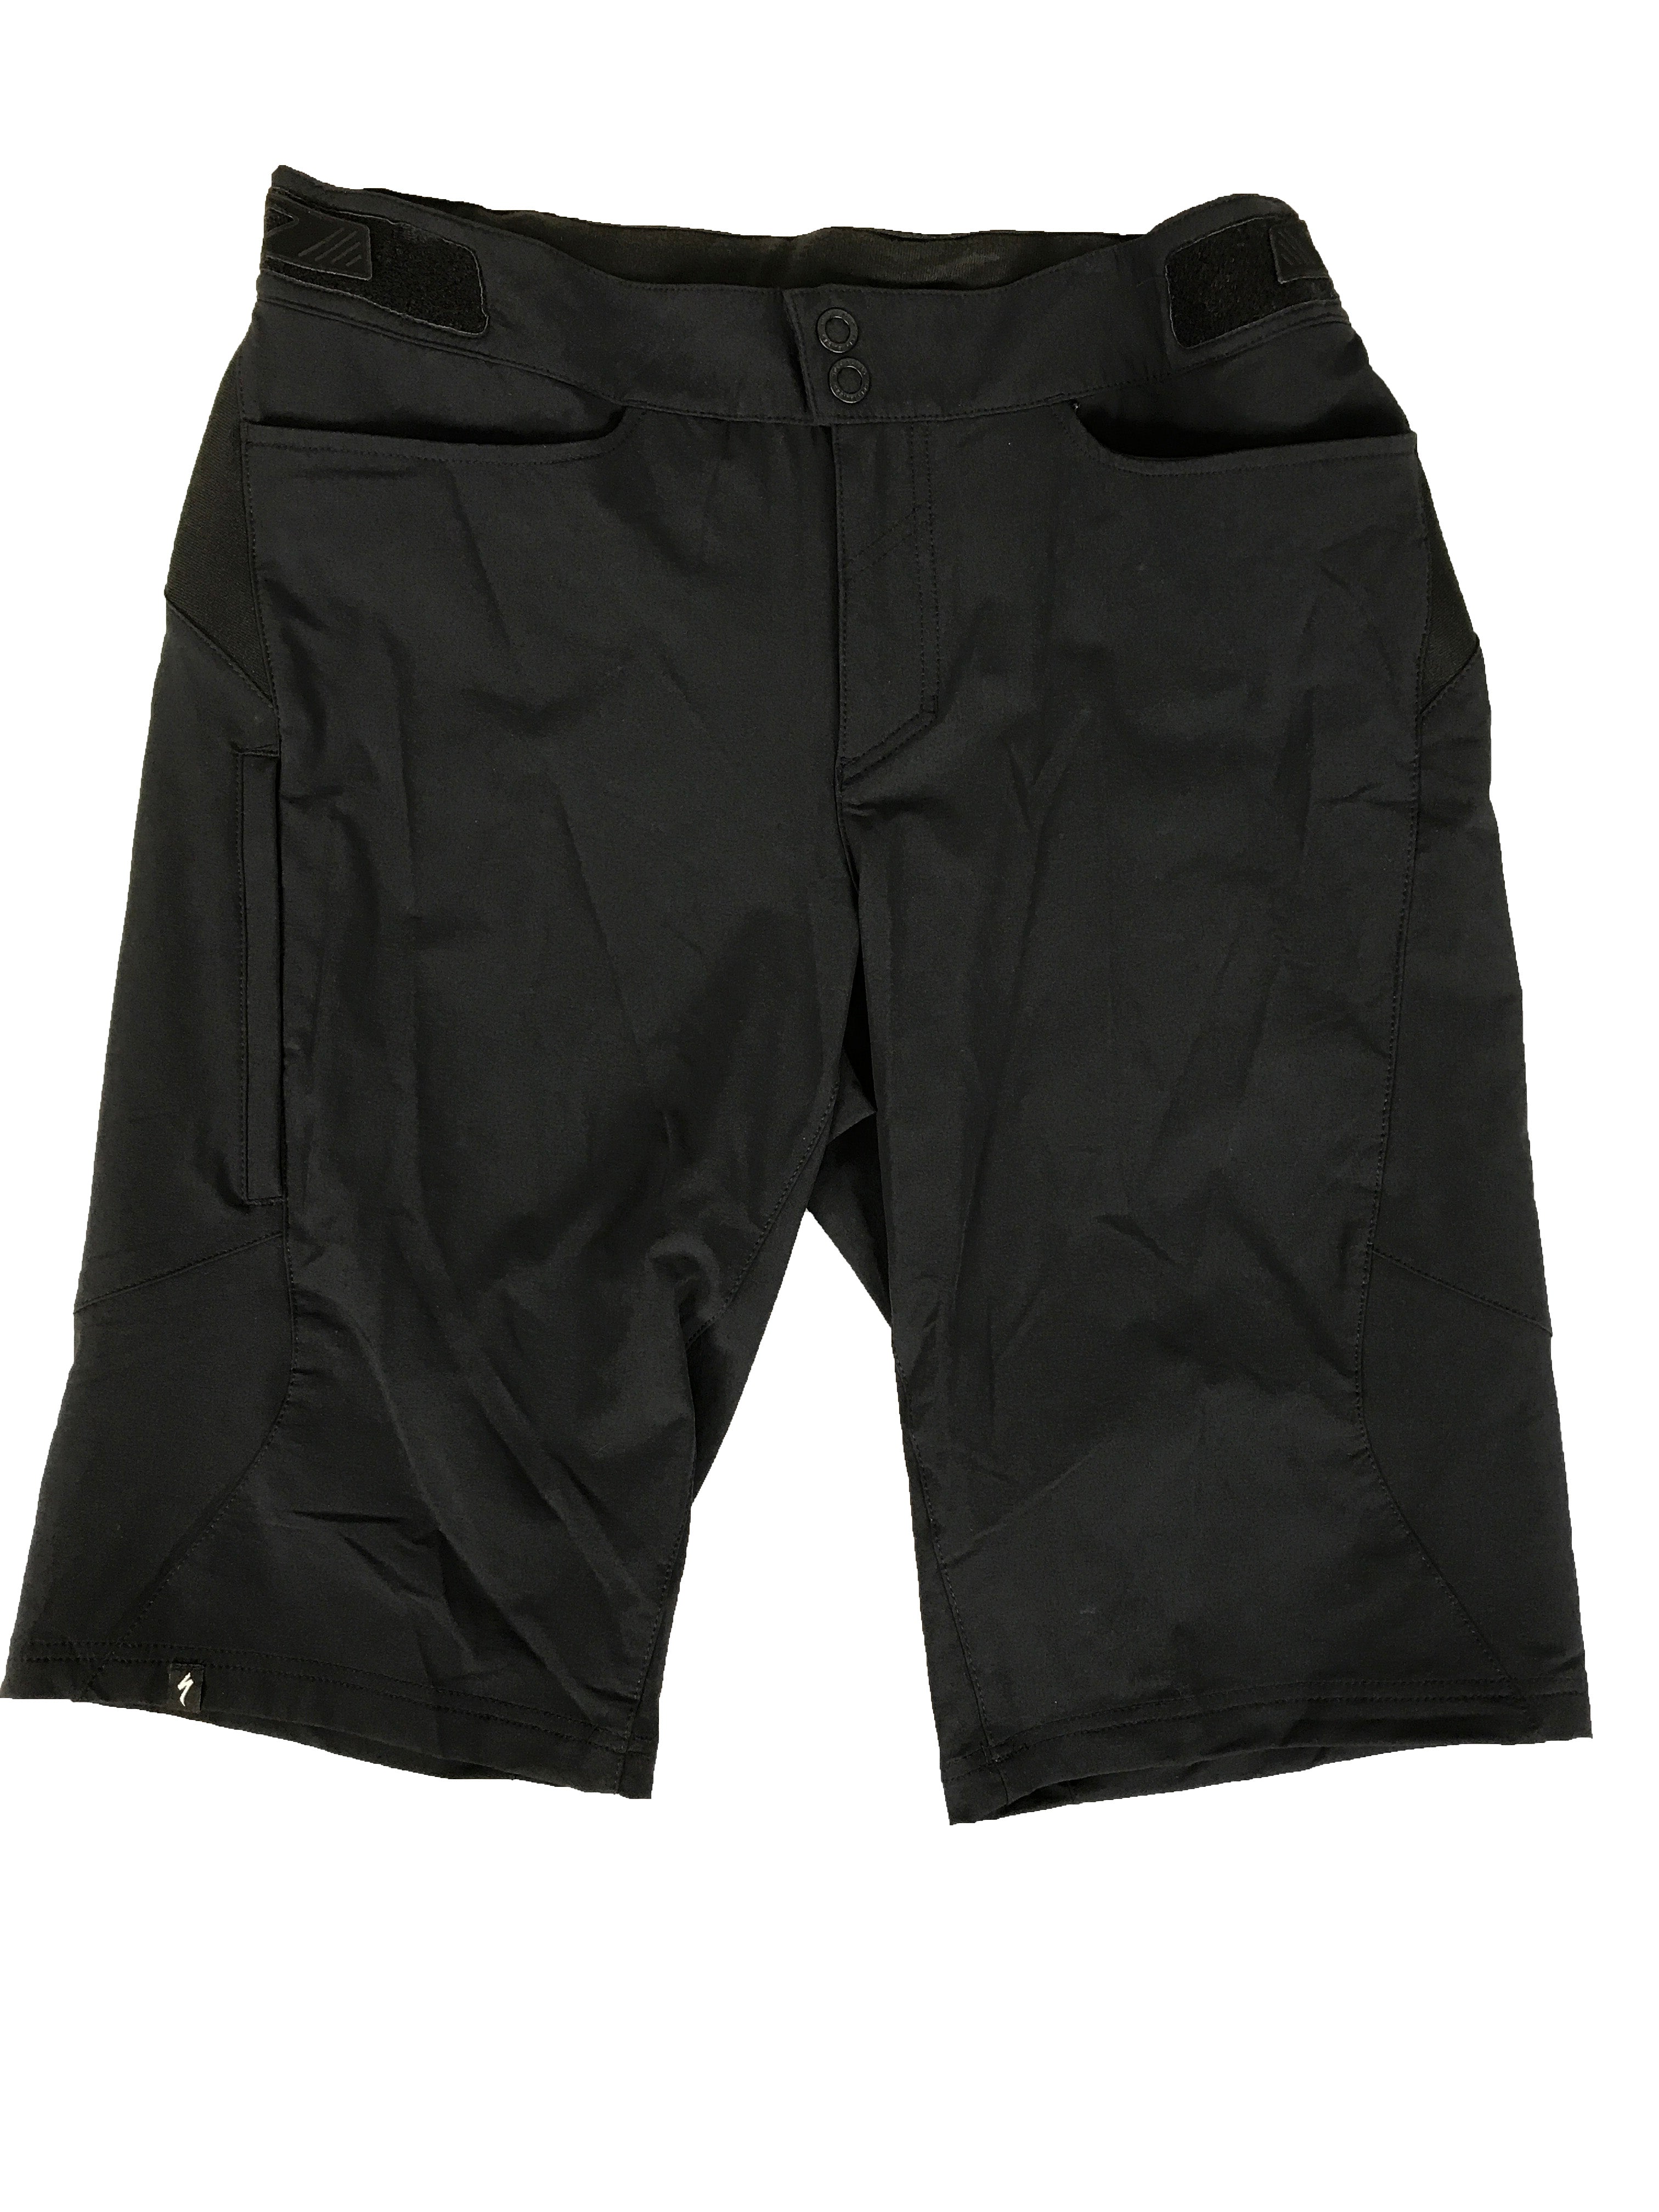 Specialized Enduro Comp Black Shorts Men's Size 42 NWT